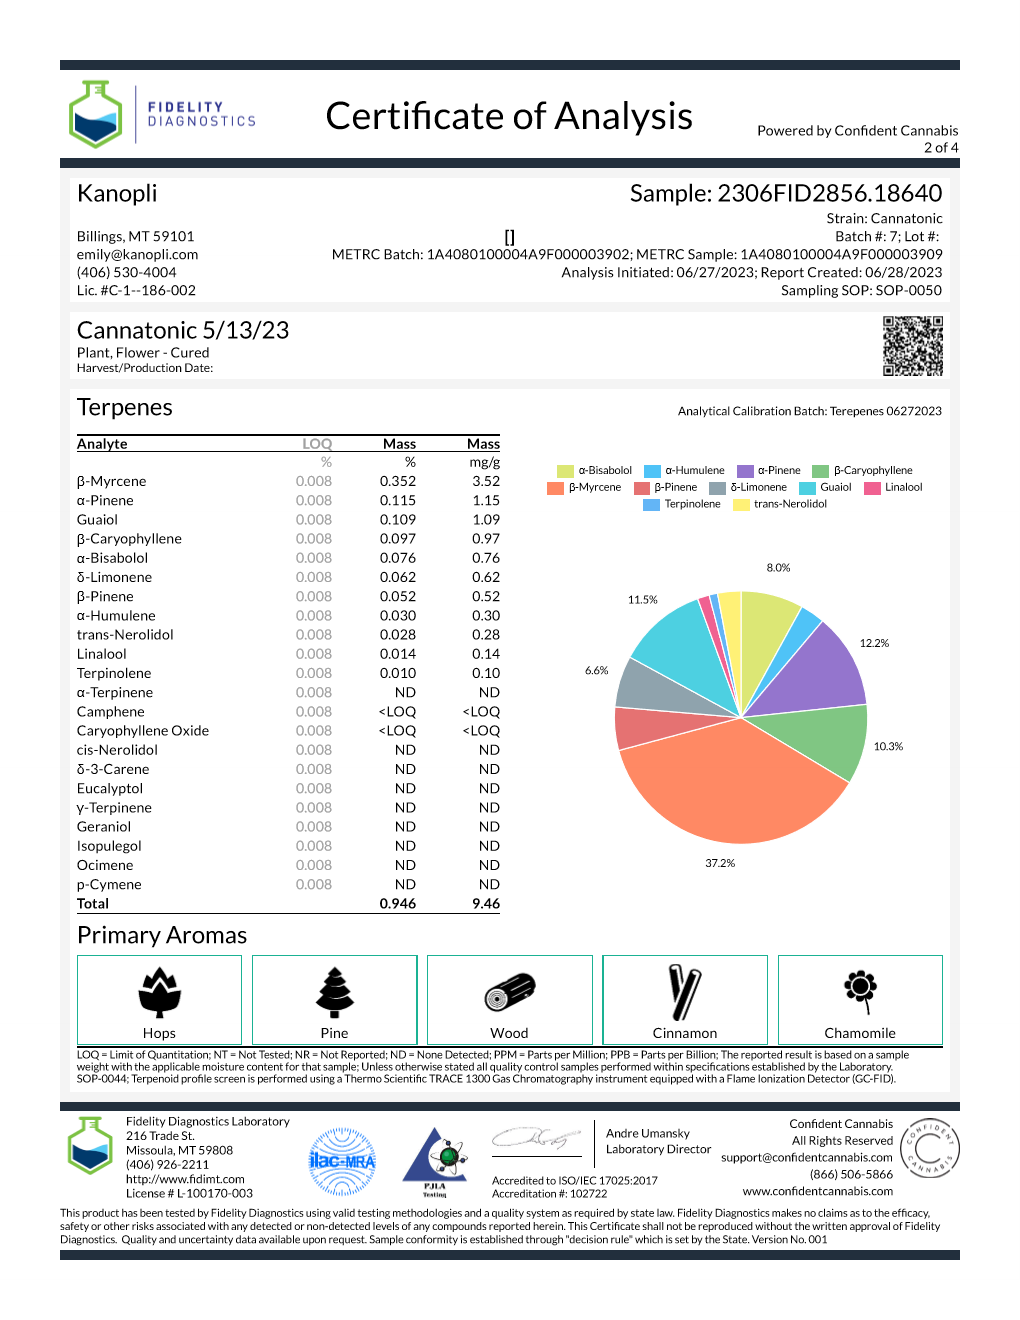 Cannatonic - Hybrid 7.34% THC, 7.47% CBD (May 2023) shorties (1 gram)